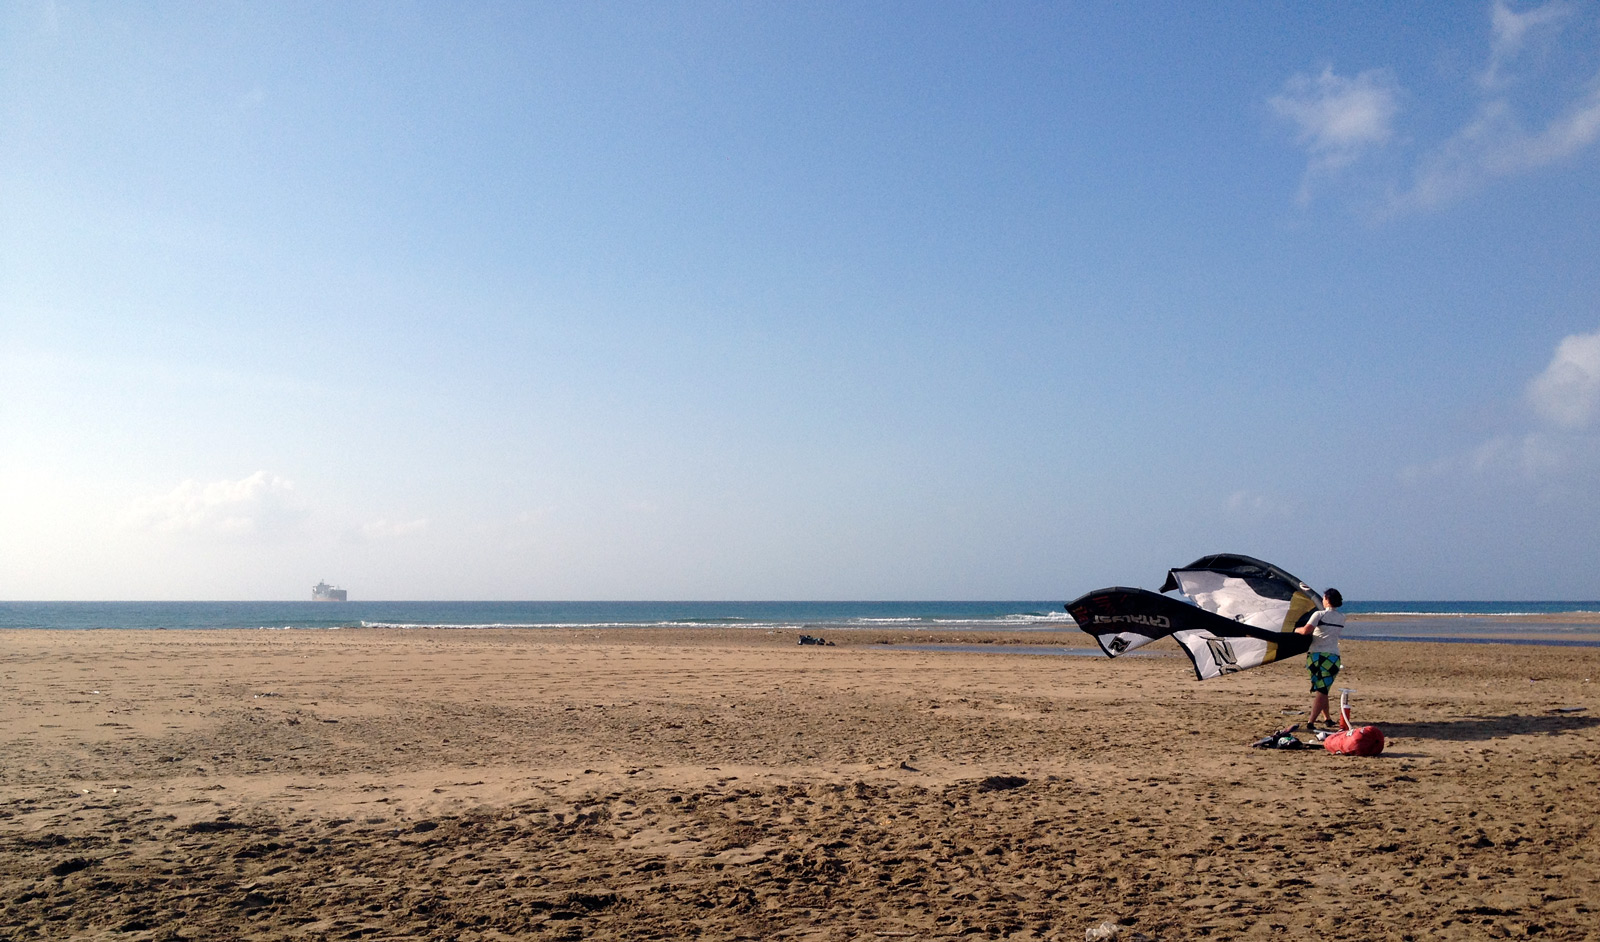 No tourists and no windsurfers. Only kite heaven.